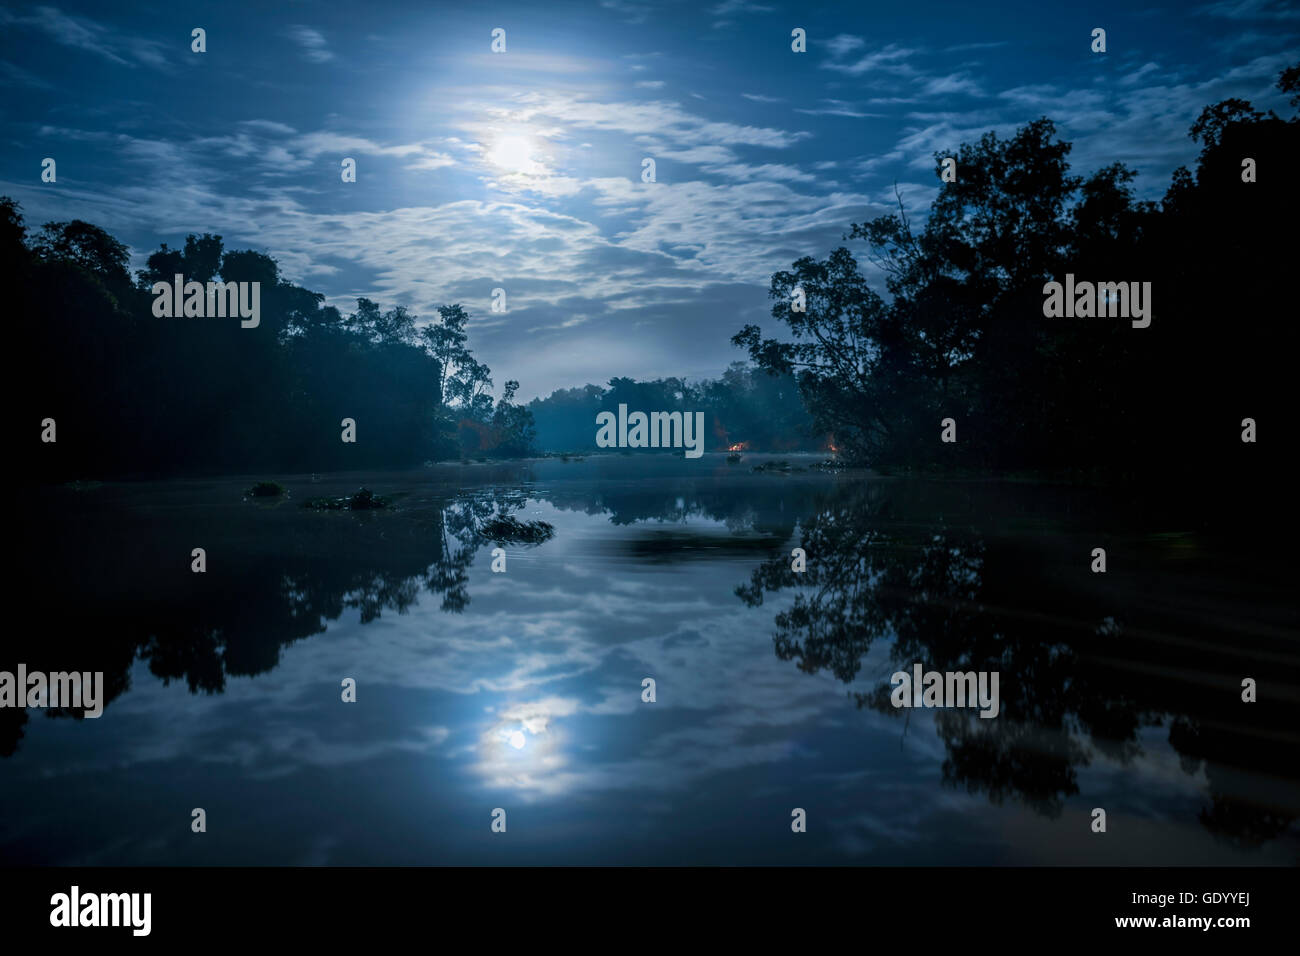 Reflection of moon in river, Orinoco River, Orinoco Delta, Venezuela Stock Photo